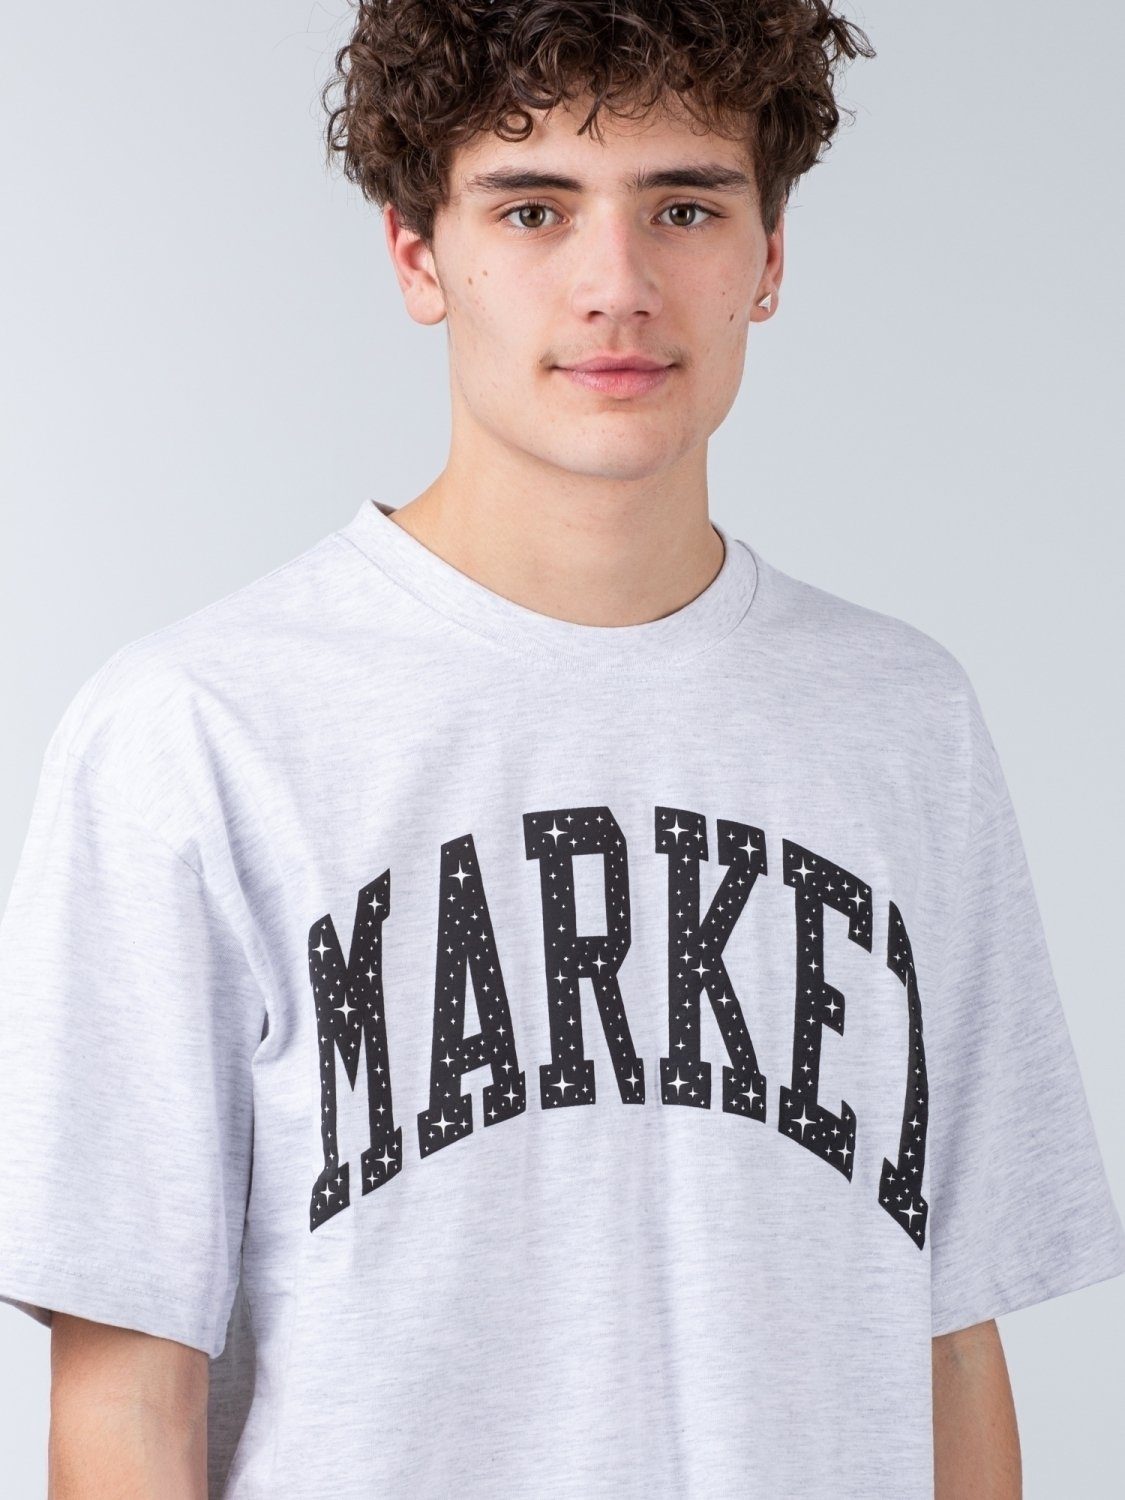 Market Arc Tee Market Ash Puff Gray T-Shirt